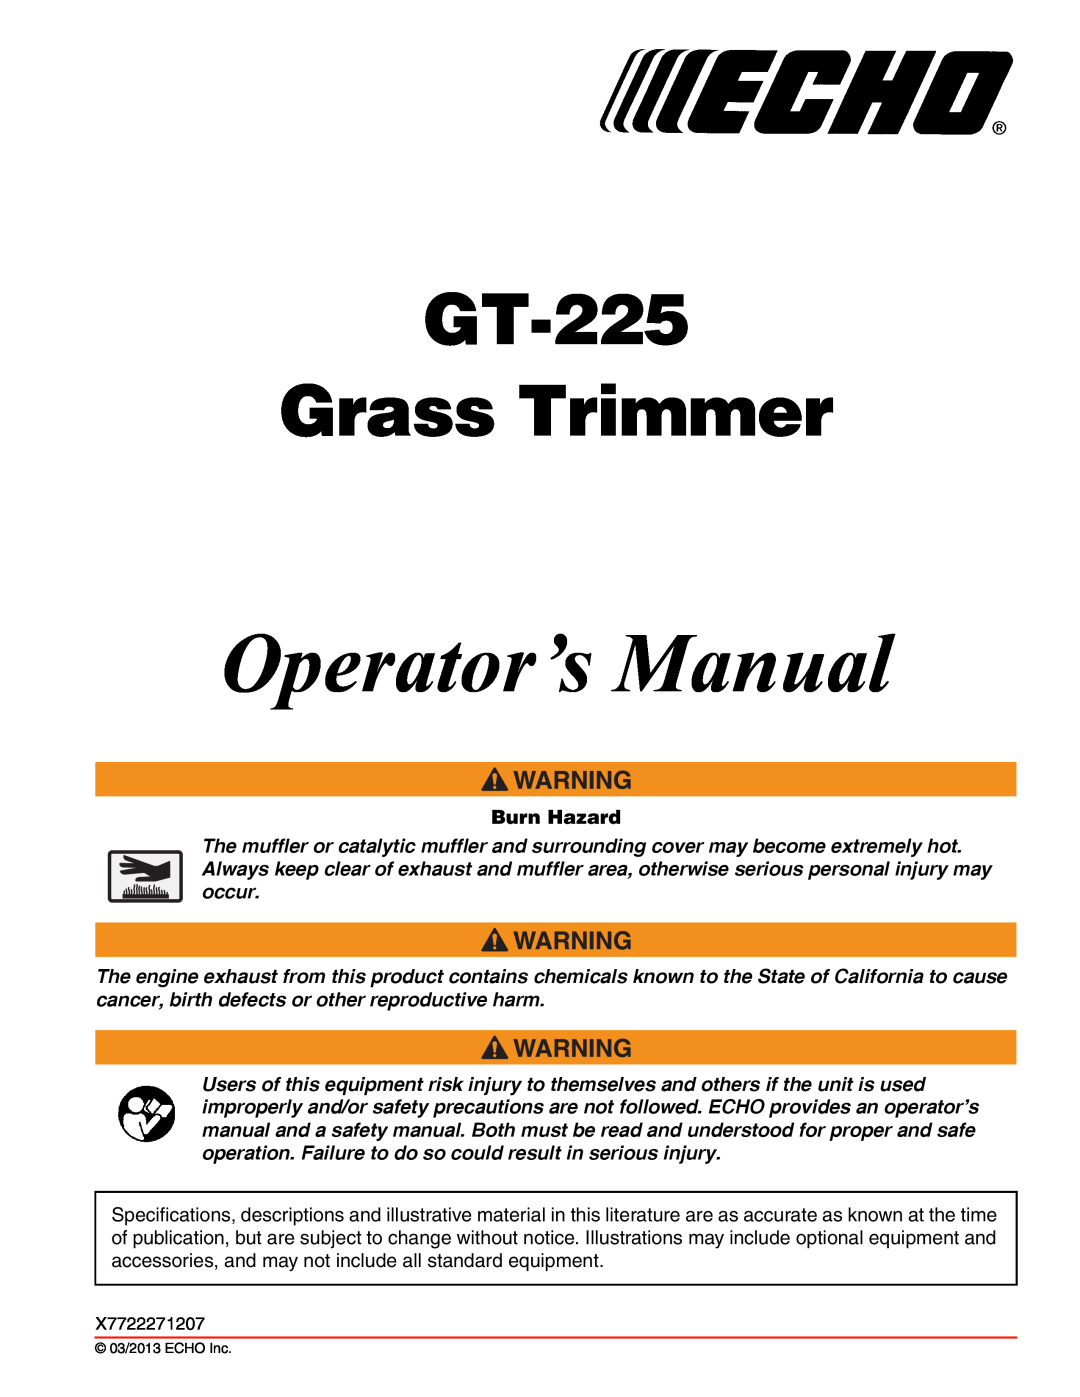 Echo specifications Burn Hazard, Operator’s Manual, GT-225 Grass Trimmer 